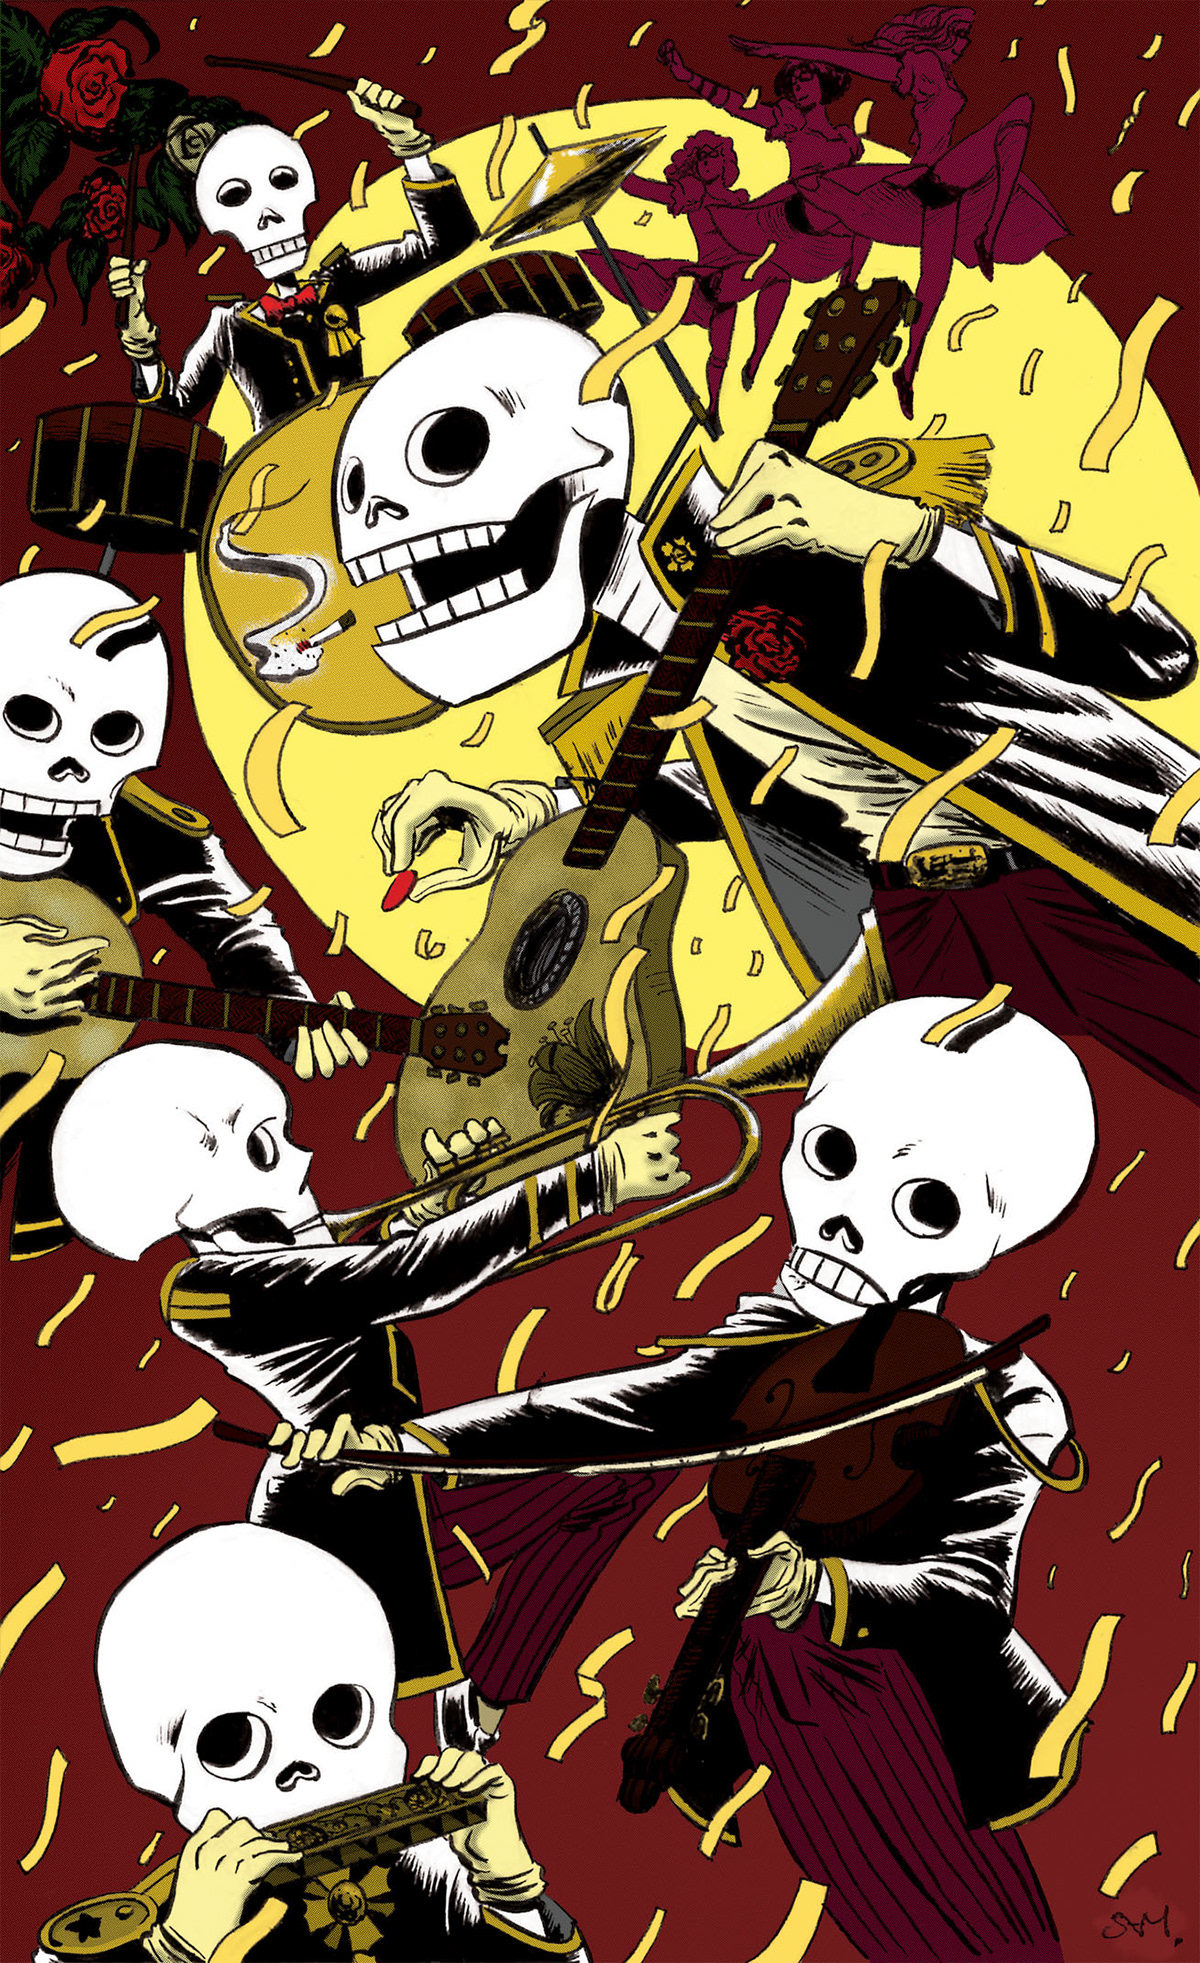 altsam altsamdrawsomg comics drawings art skeleton Mexican dead death skull mariachi band guitar Roses